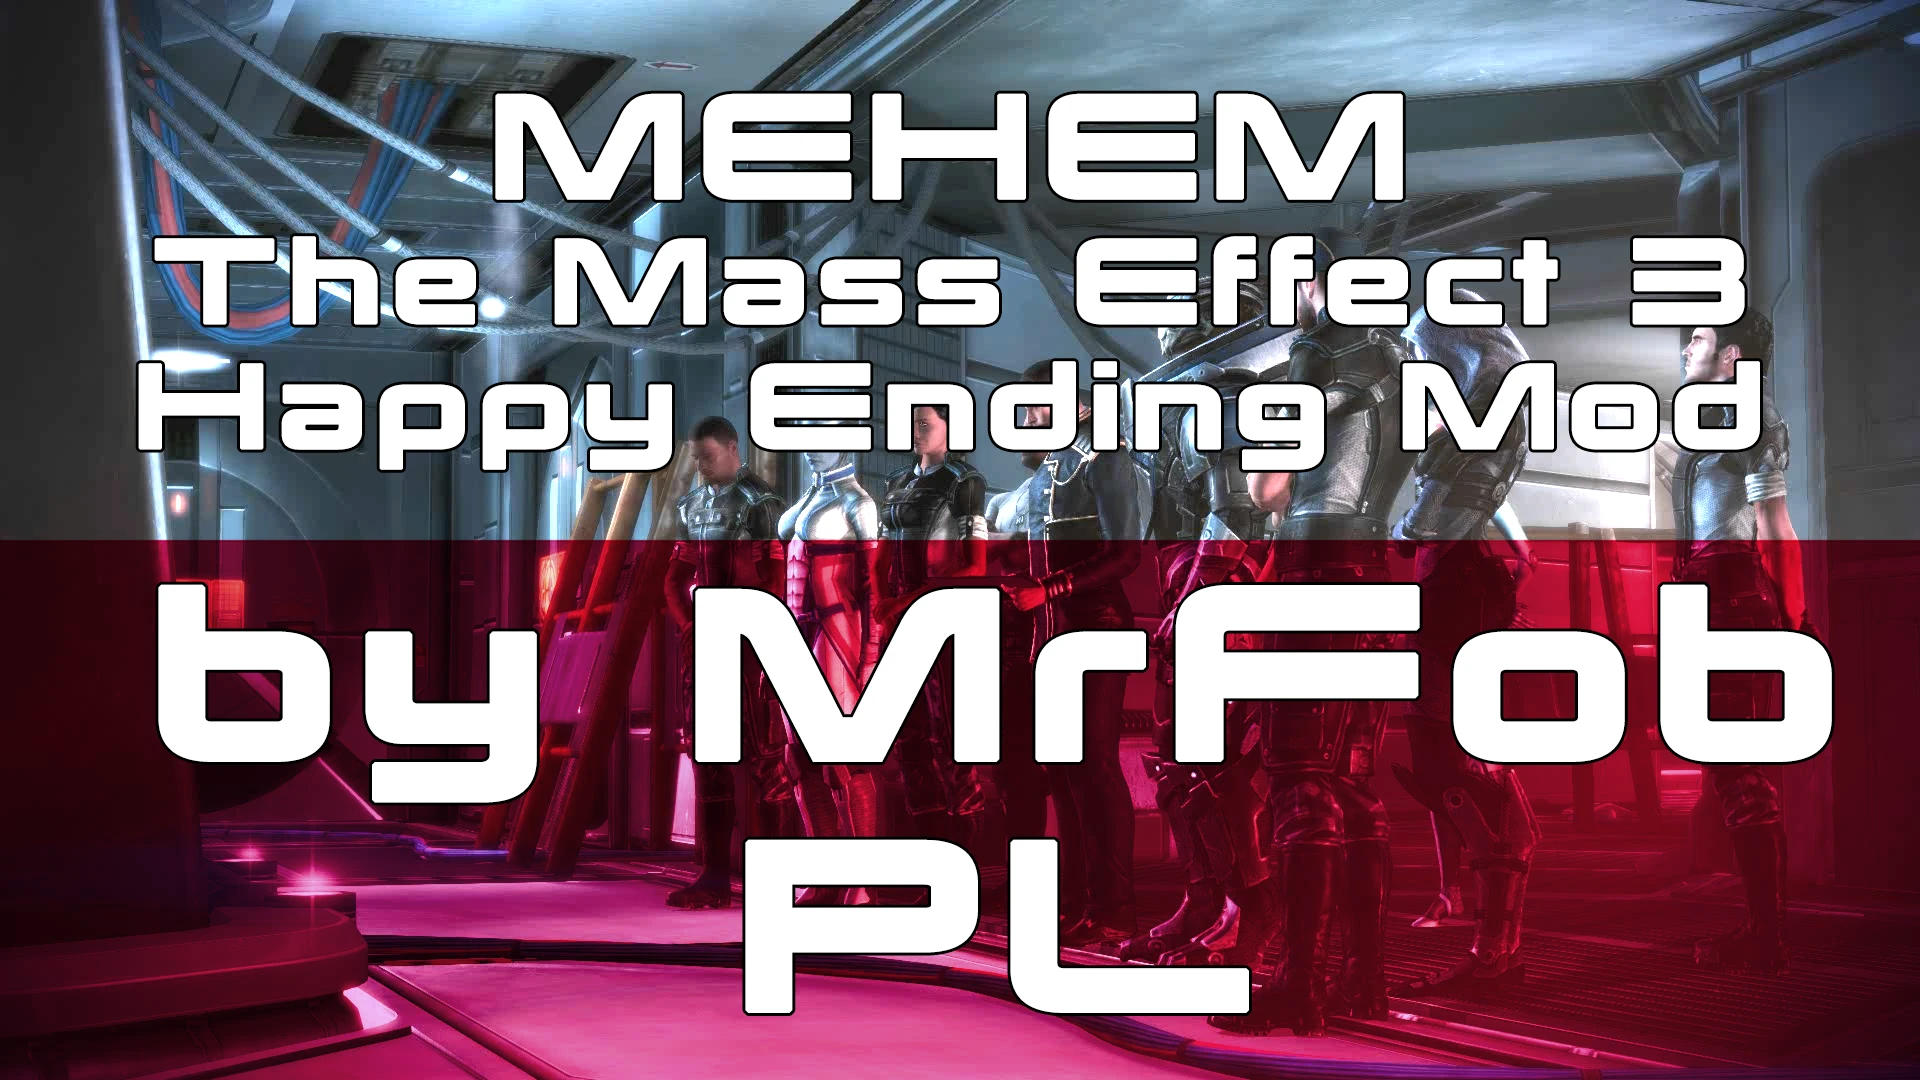 mass effect happy ending mod